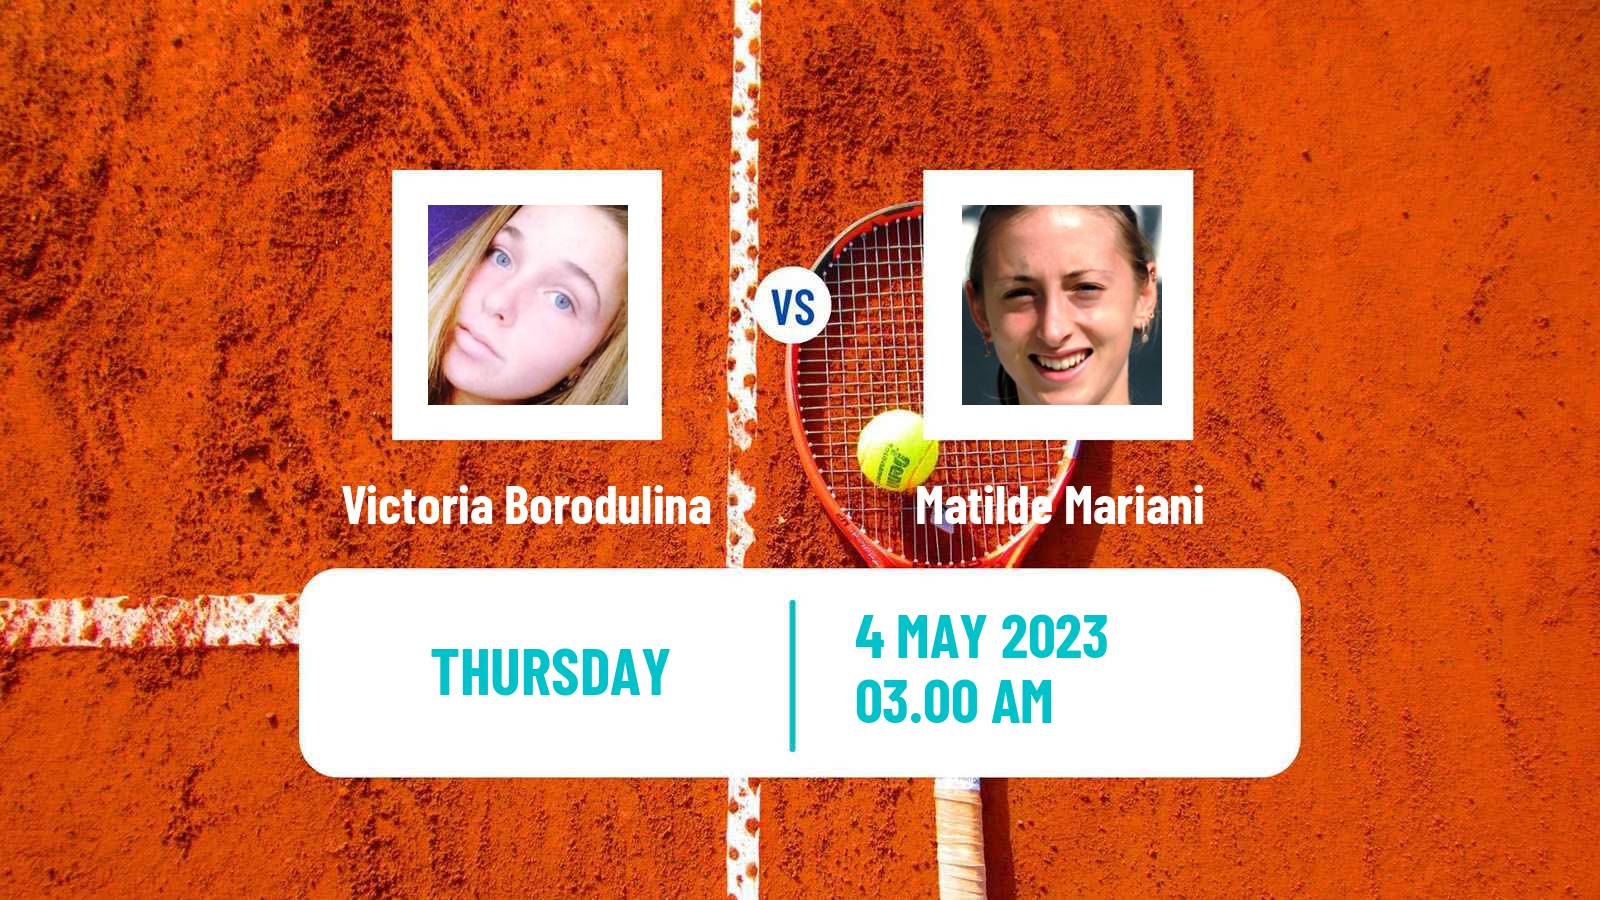 Tennis ITF Tournaments Victoria Borodulina - Matilde Mariani